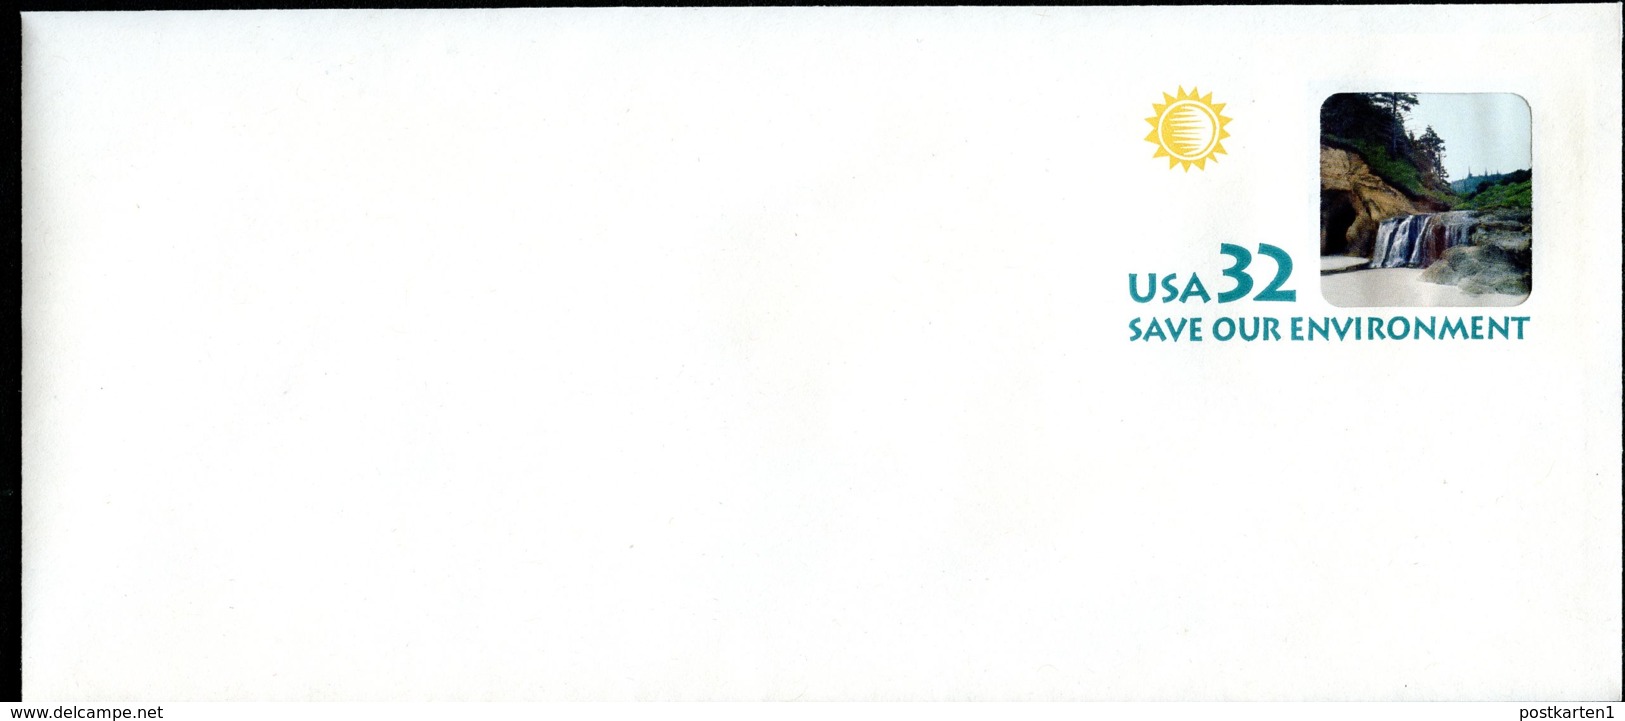 SAVE ENVIRONMENT USA U640 PSE Cover Mint 1996 - Umweltschutz Und Klima